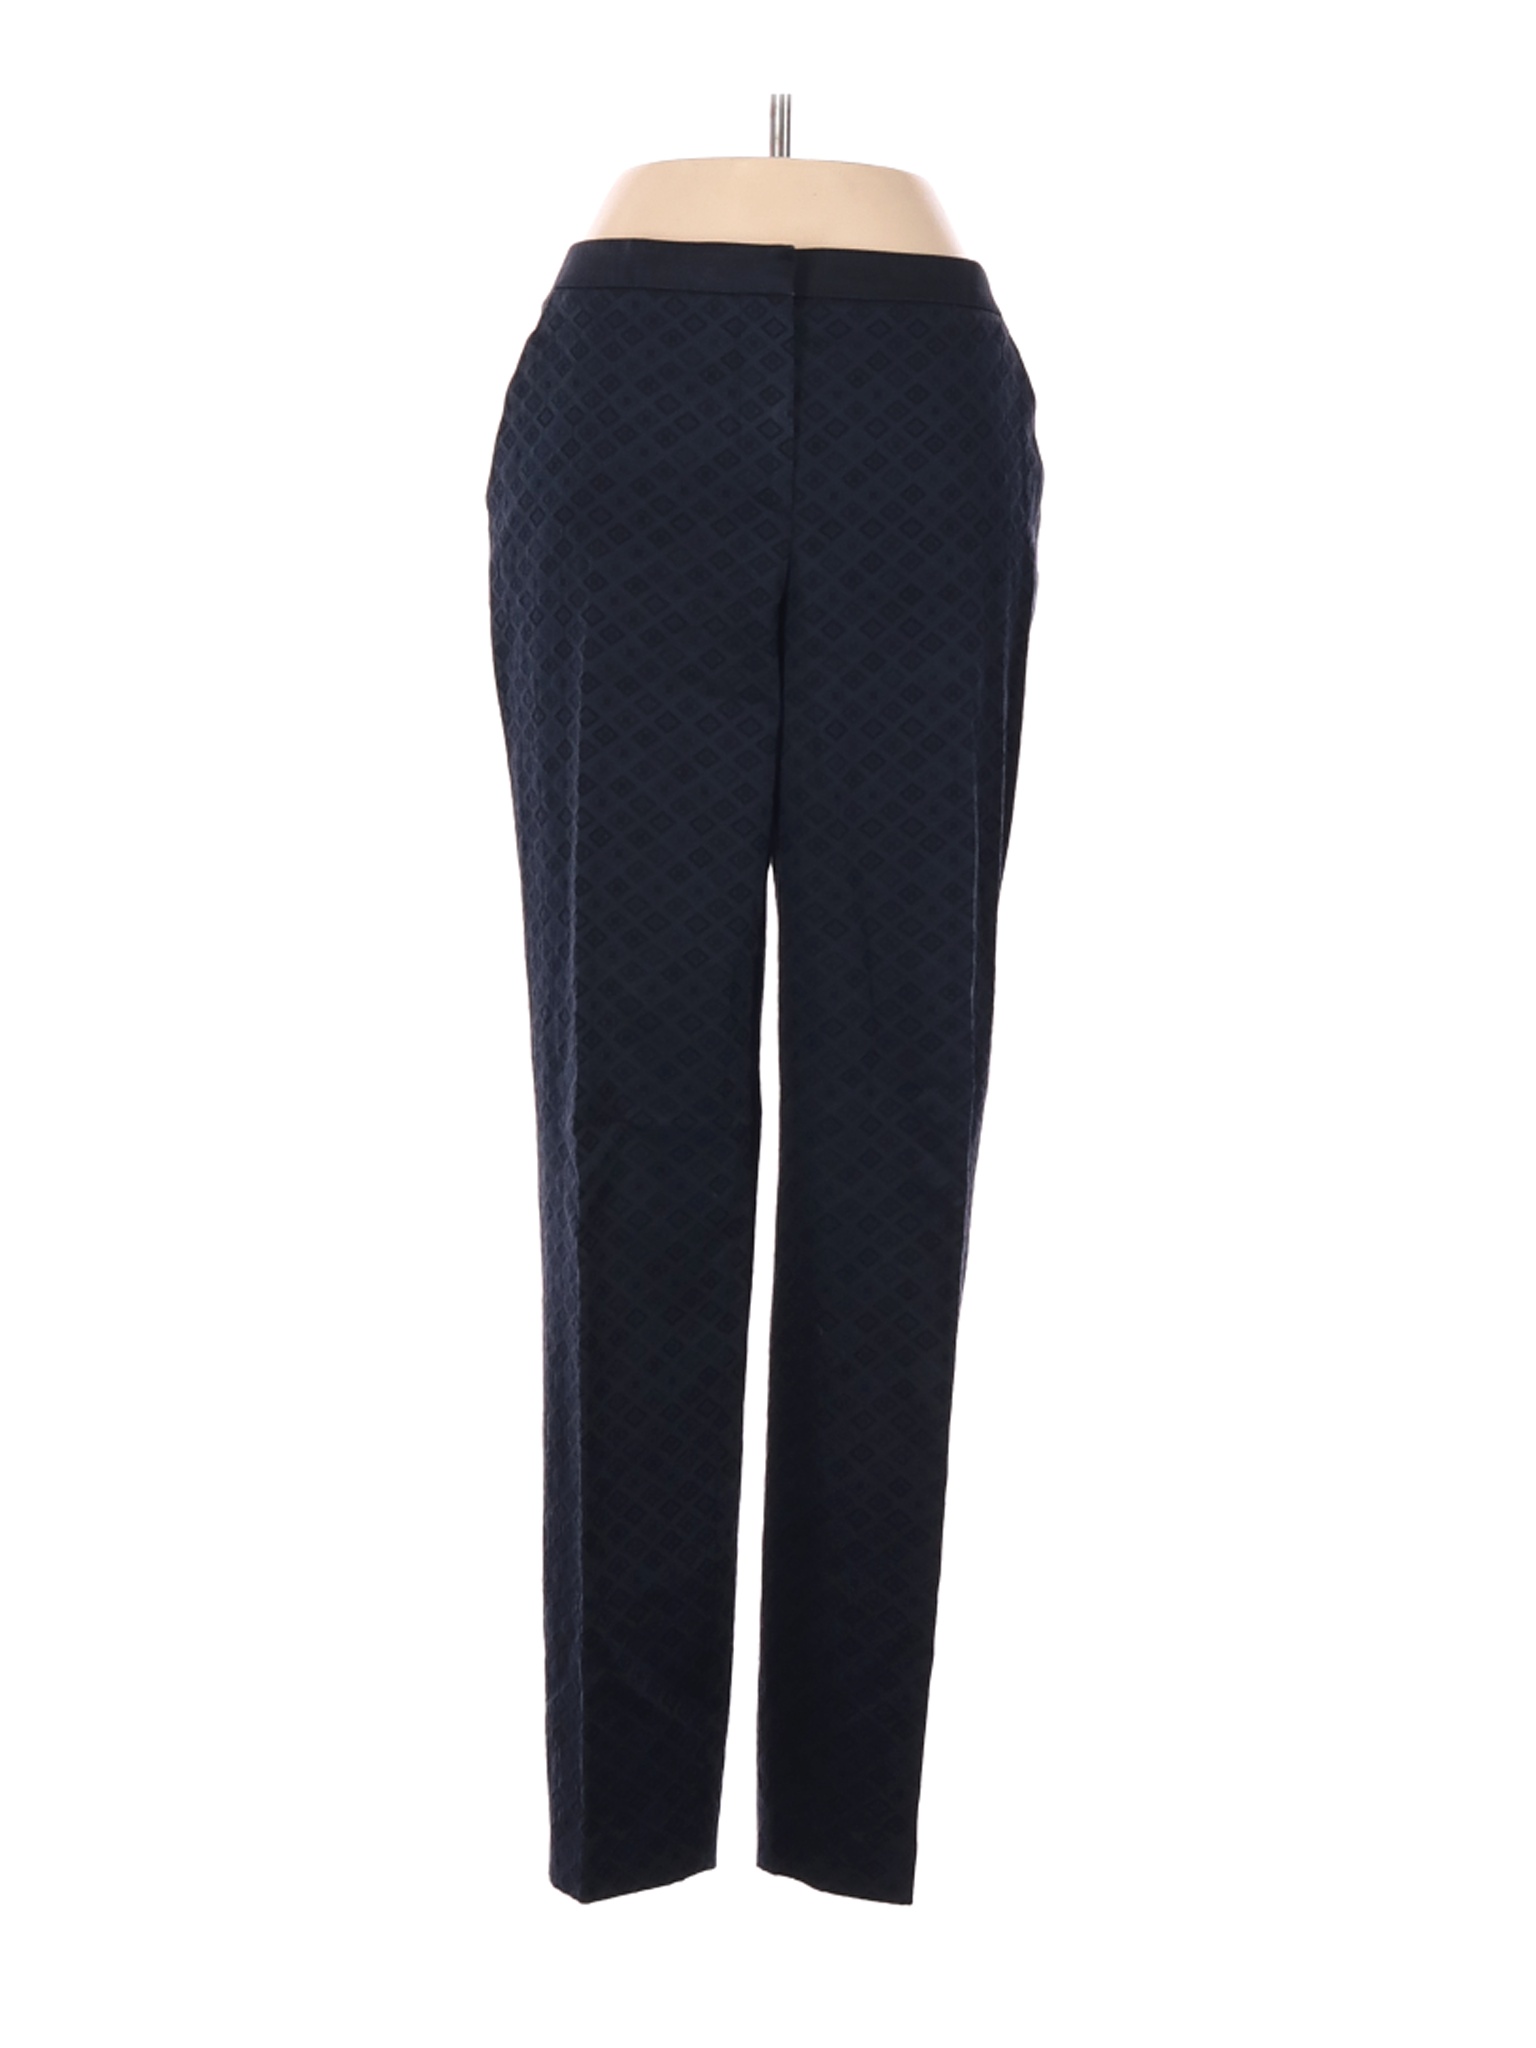 Elie Tahari Women Blue Casual Pants 4 | eBay